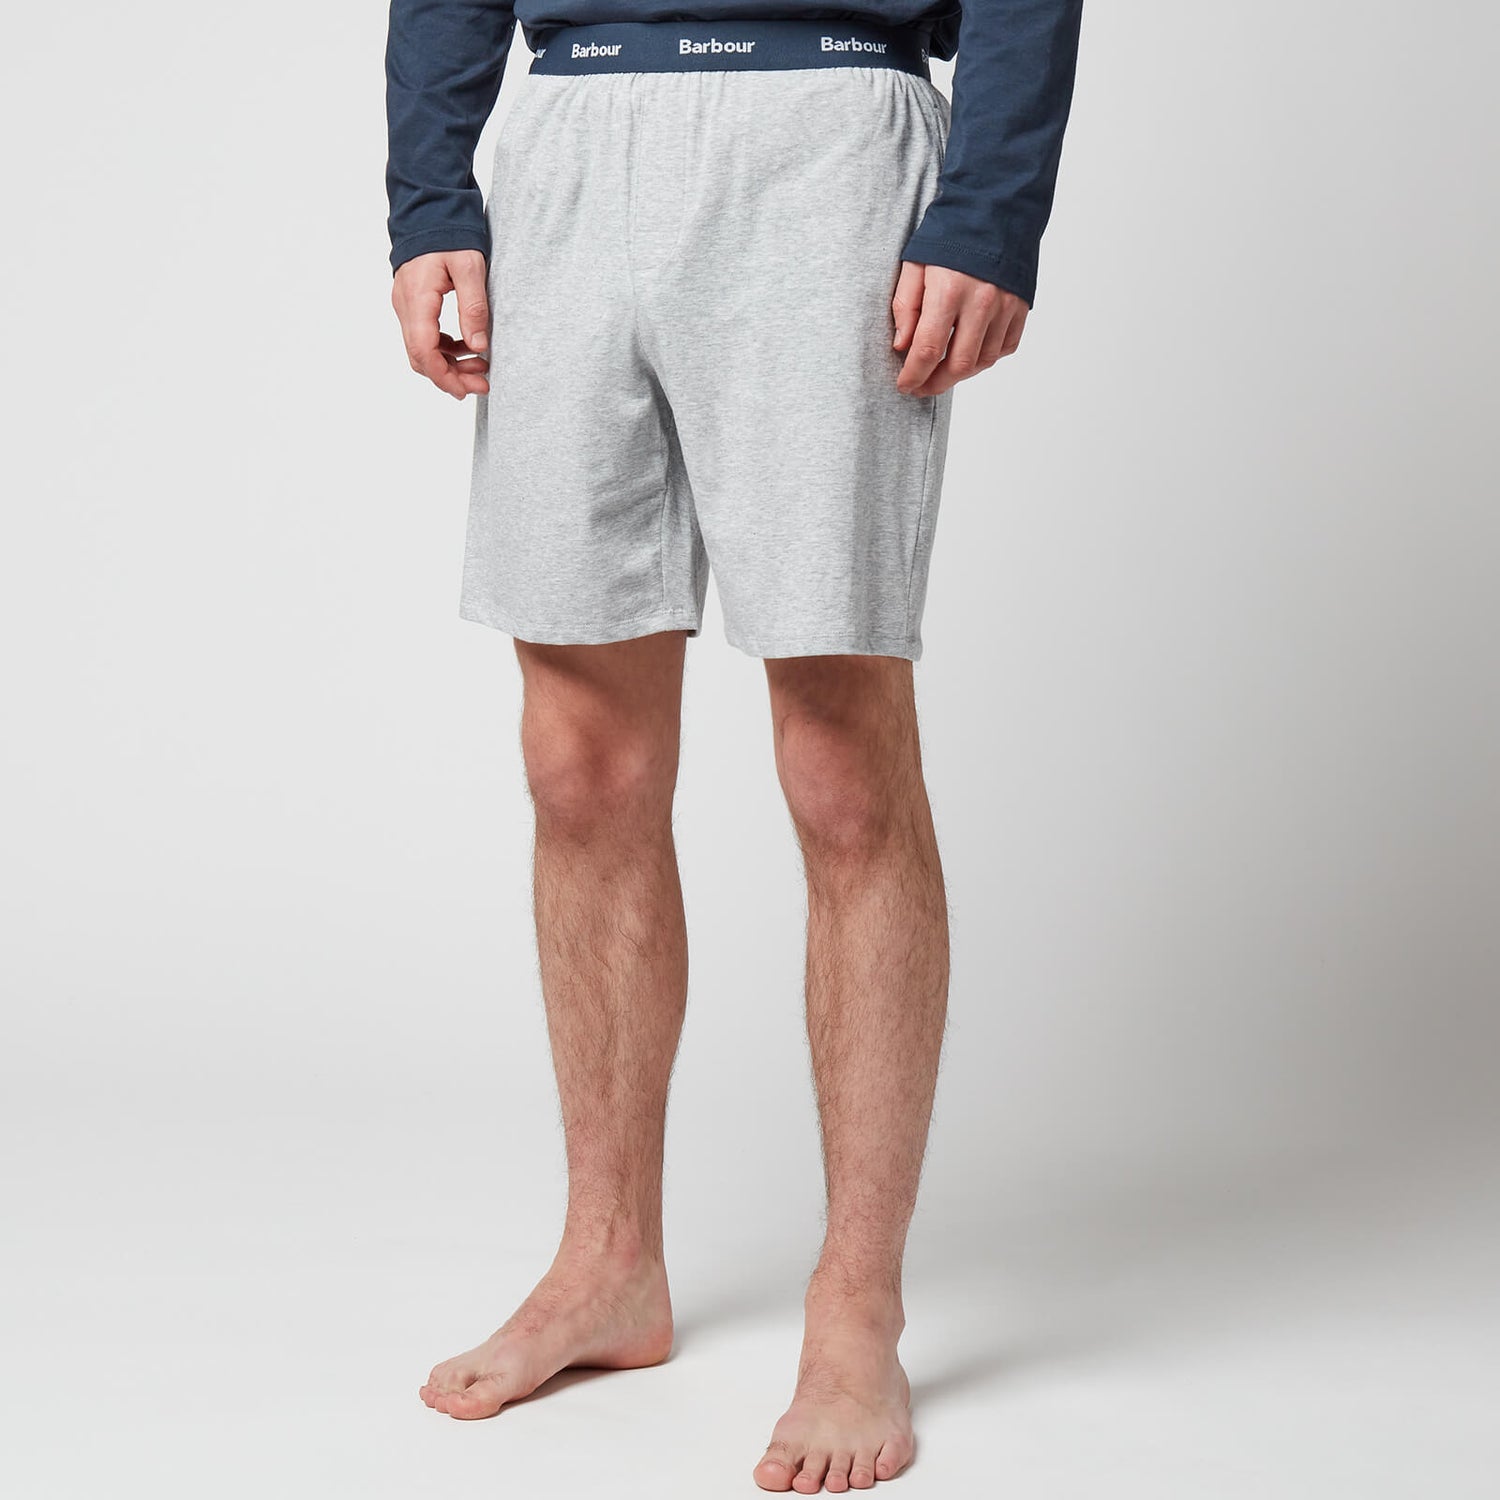 Barbour Heritage Men's Abbott Shorts - Light Grey Marl - M